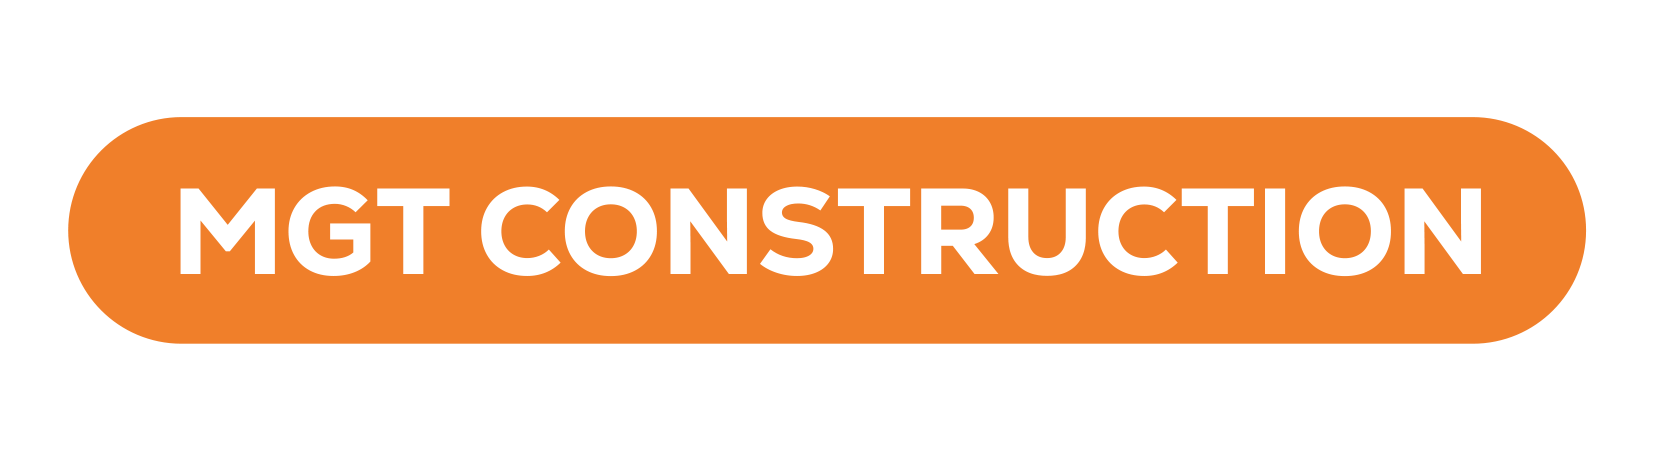 MGT Construction Southern Ltd